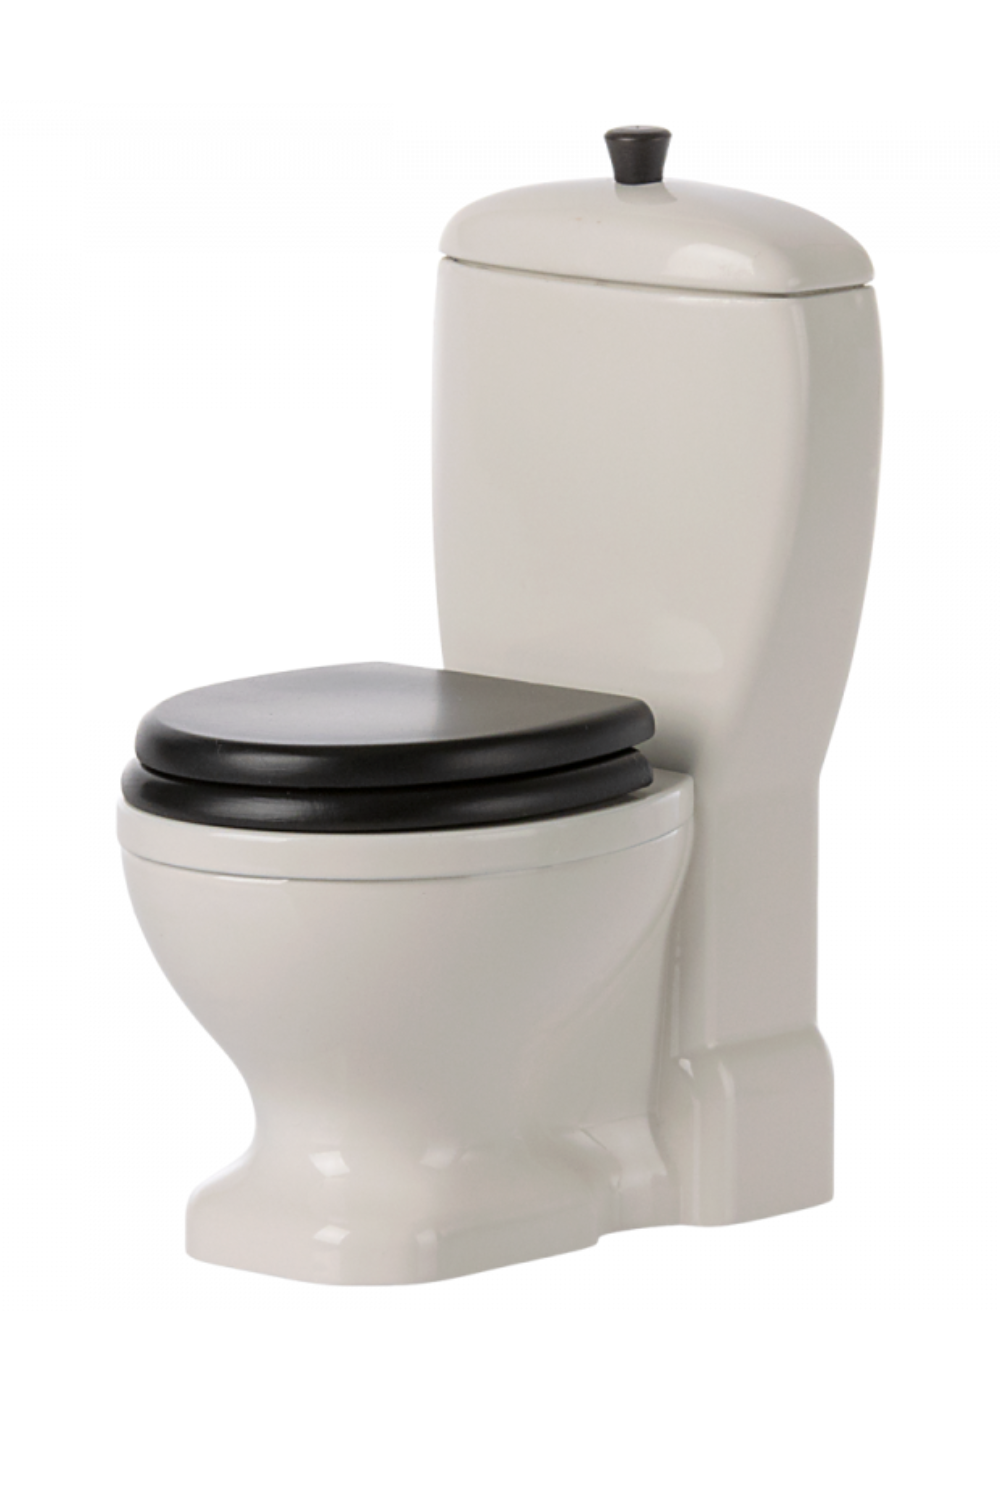 Maileg Miniature Size Toilet (larger): Dollhouse Bathroom Decor